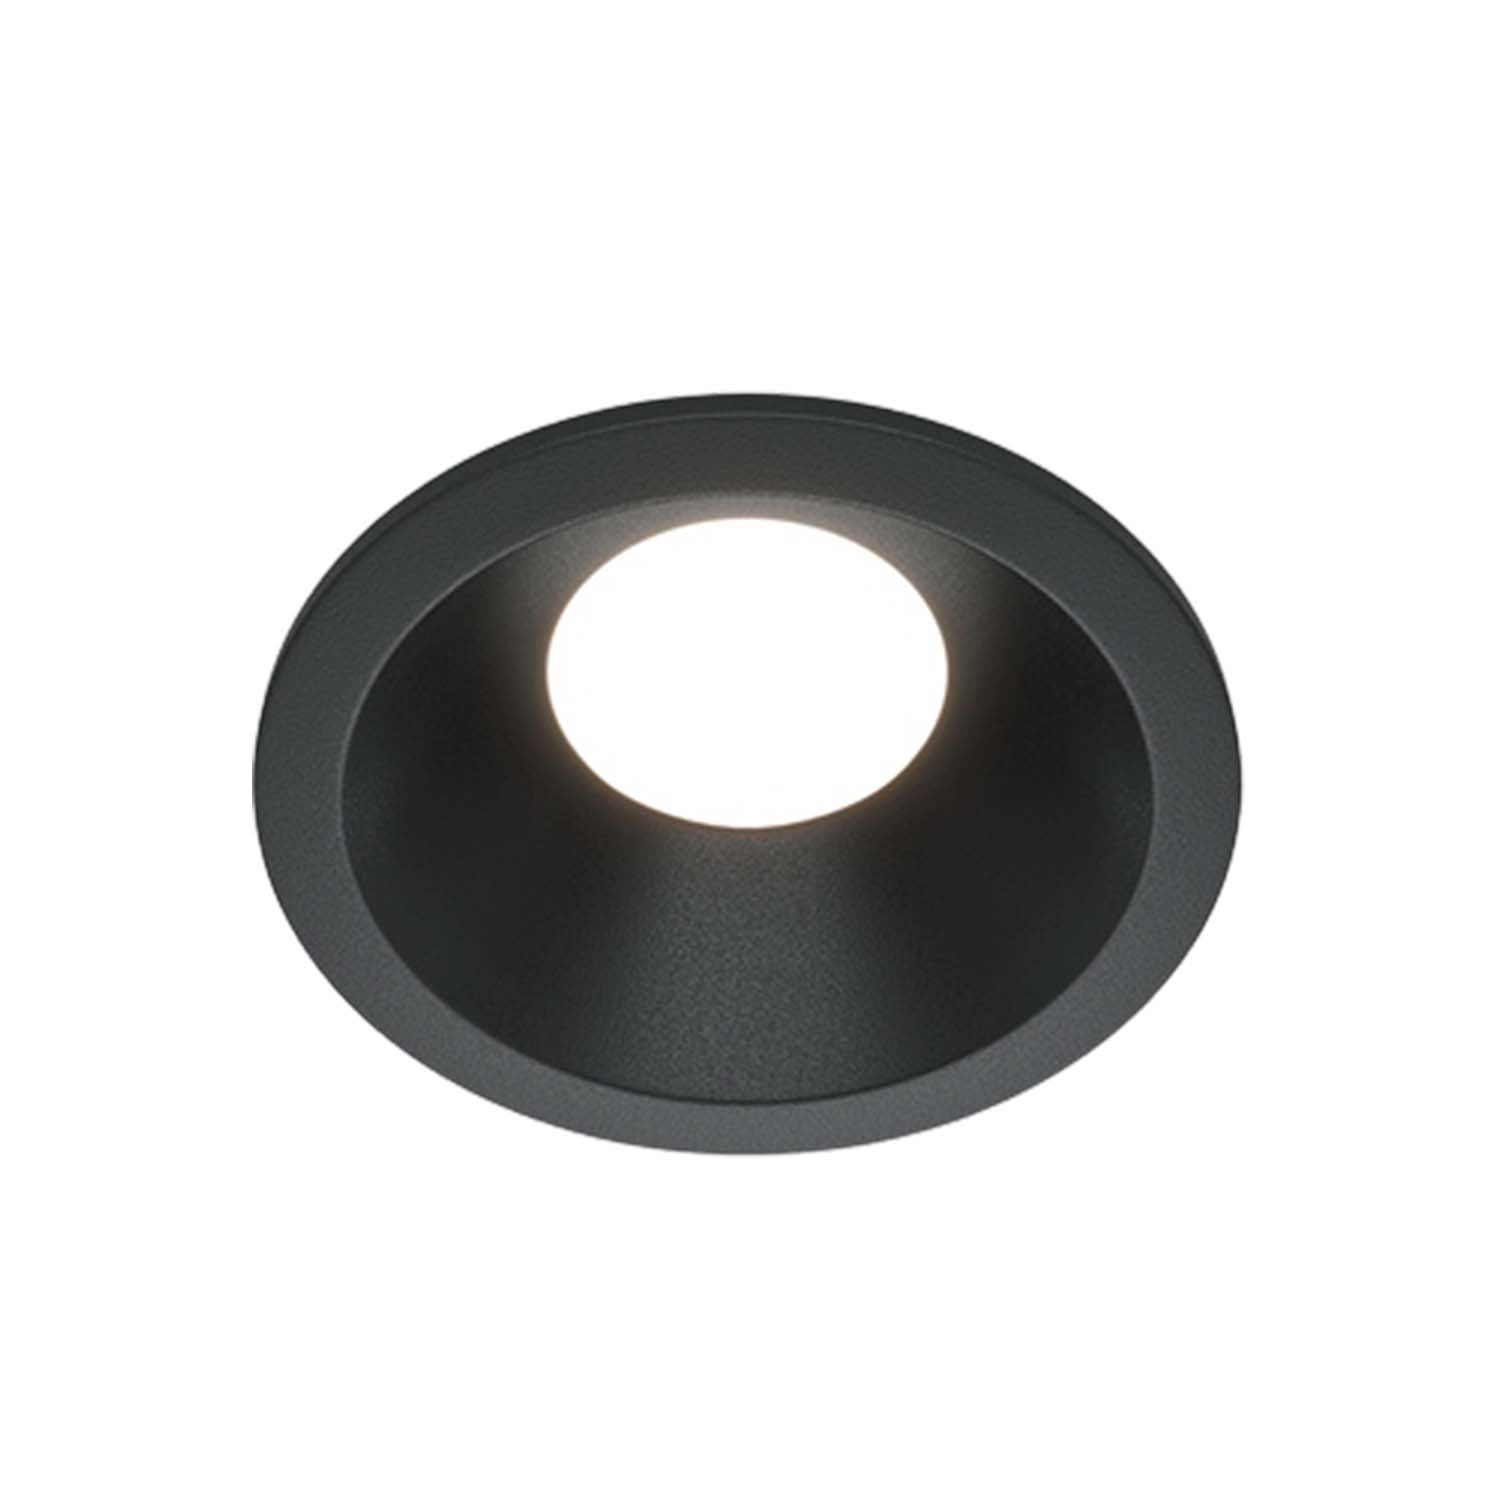 ZOOM - Waterproof outdoor round recessed spotlight, black or white, 85mm